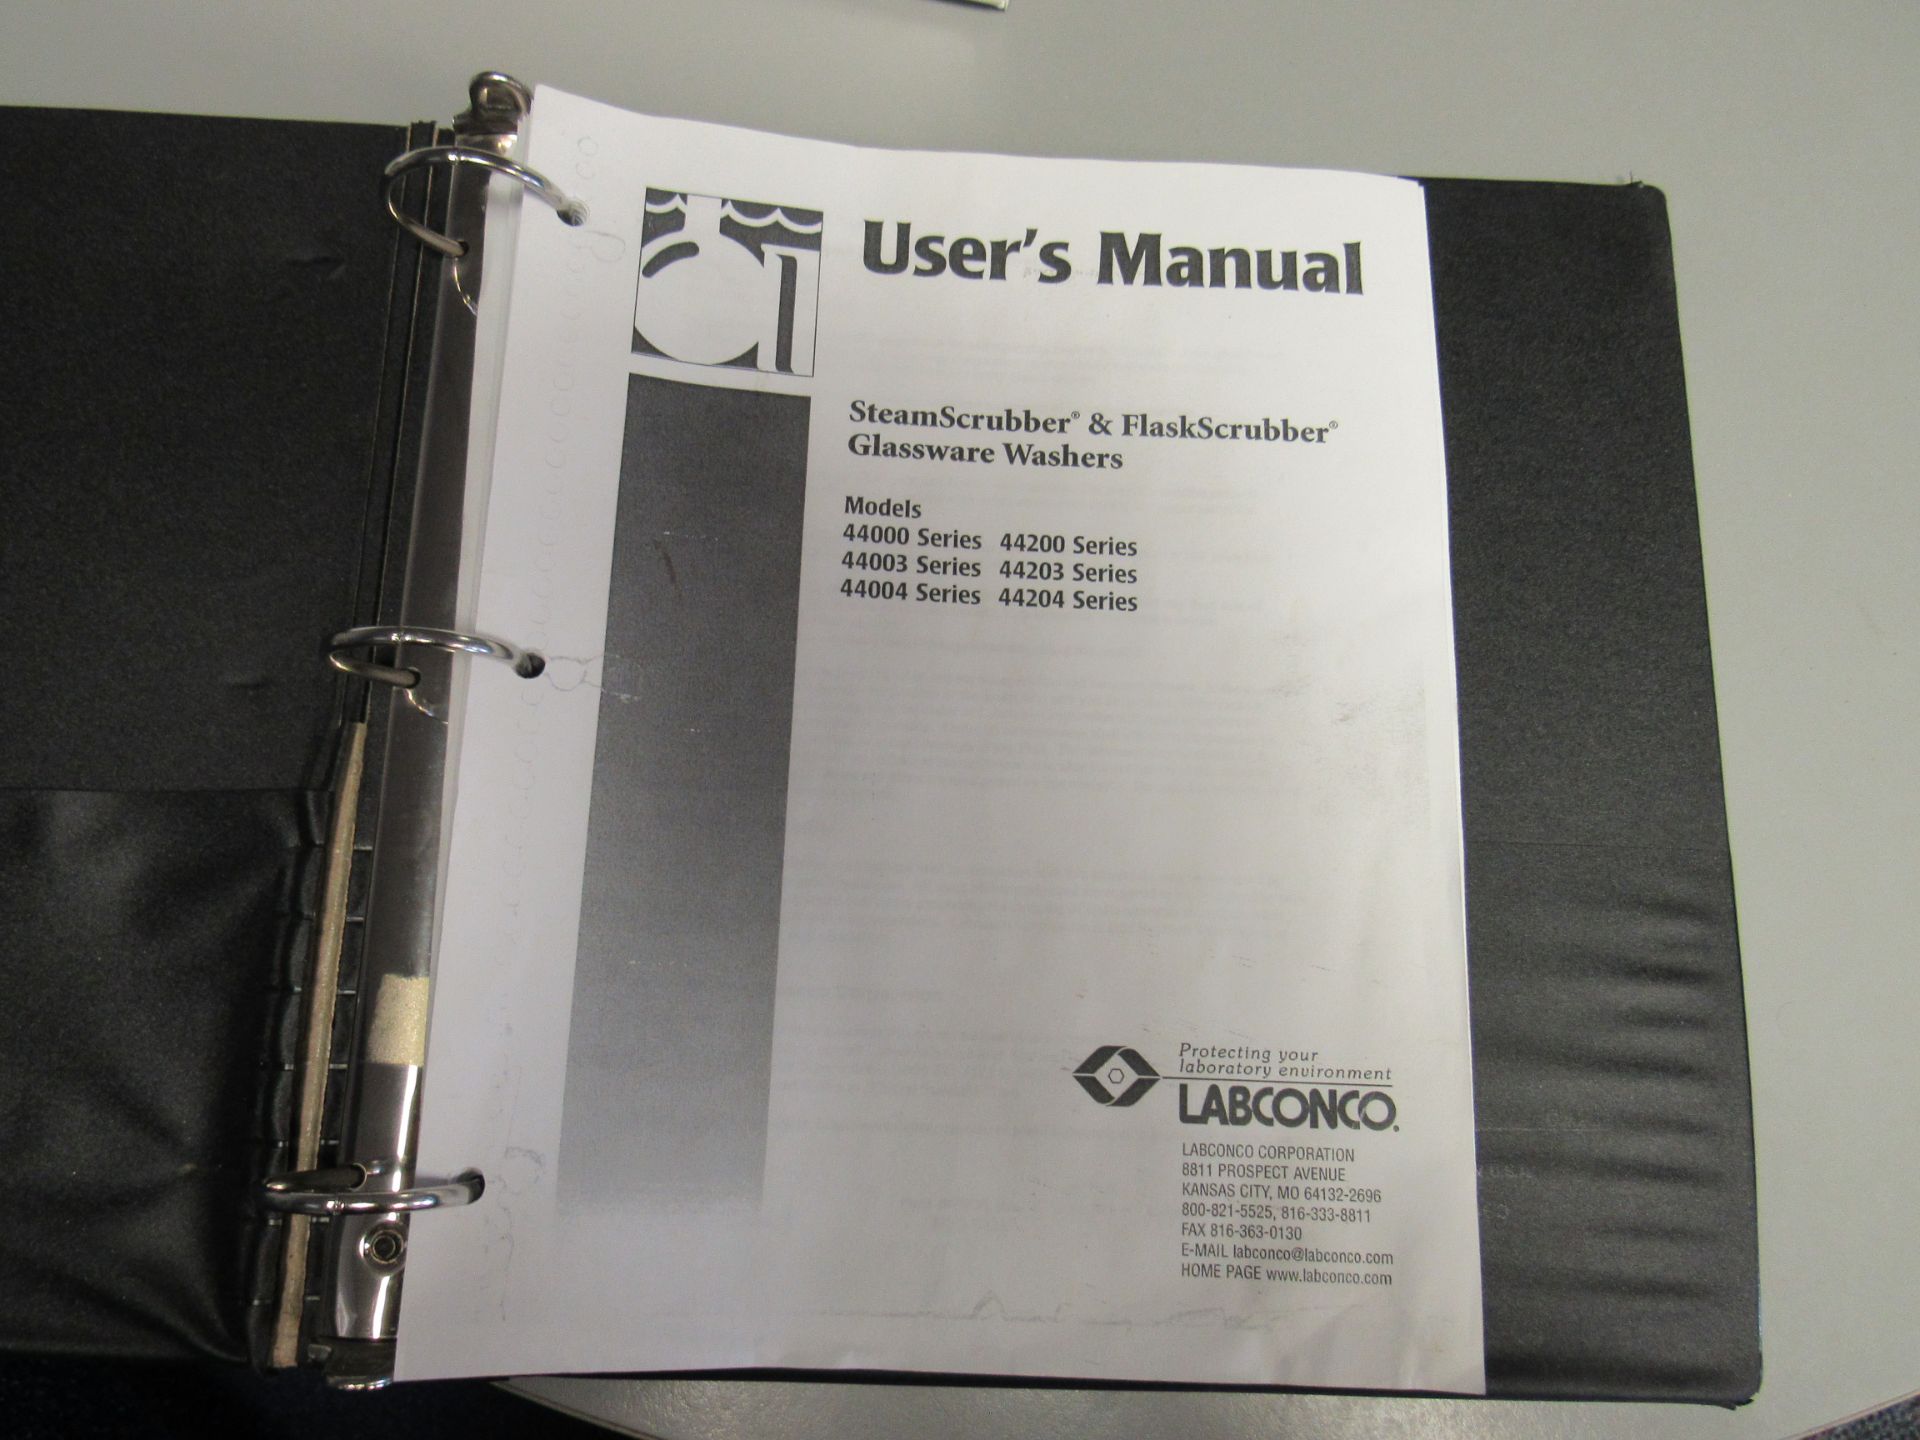 Massman Side-tab Sealer, Model # 108-OTCT, S/N 940825, side flange sealer for bliss-style box / - Image 7 of 7